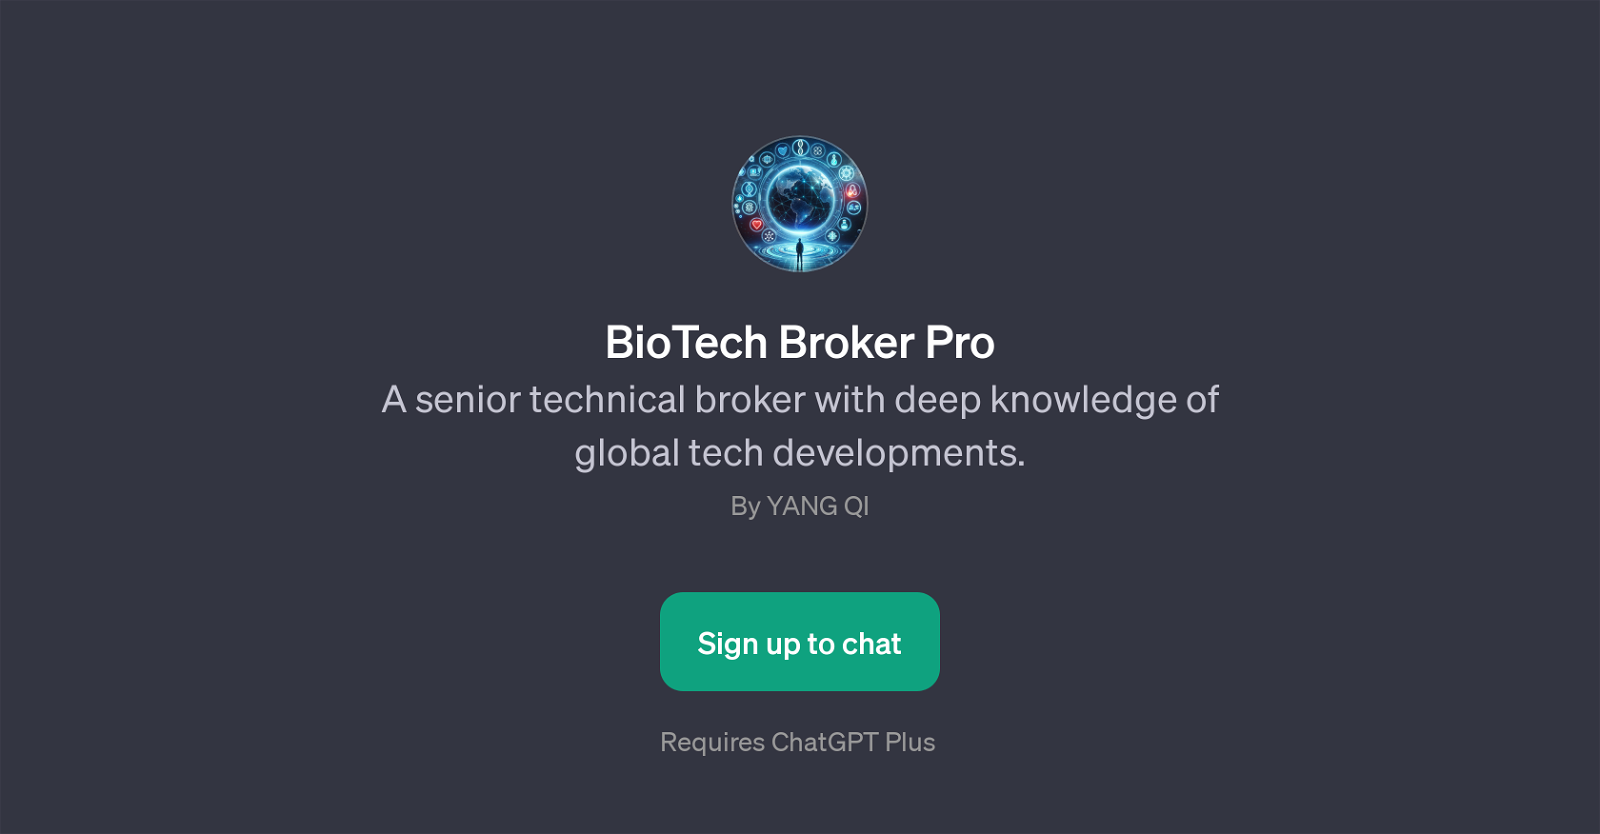 BioTech Broker Pro website